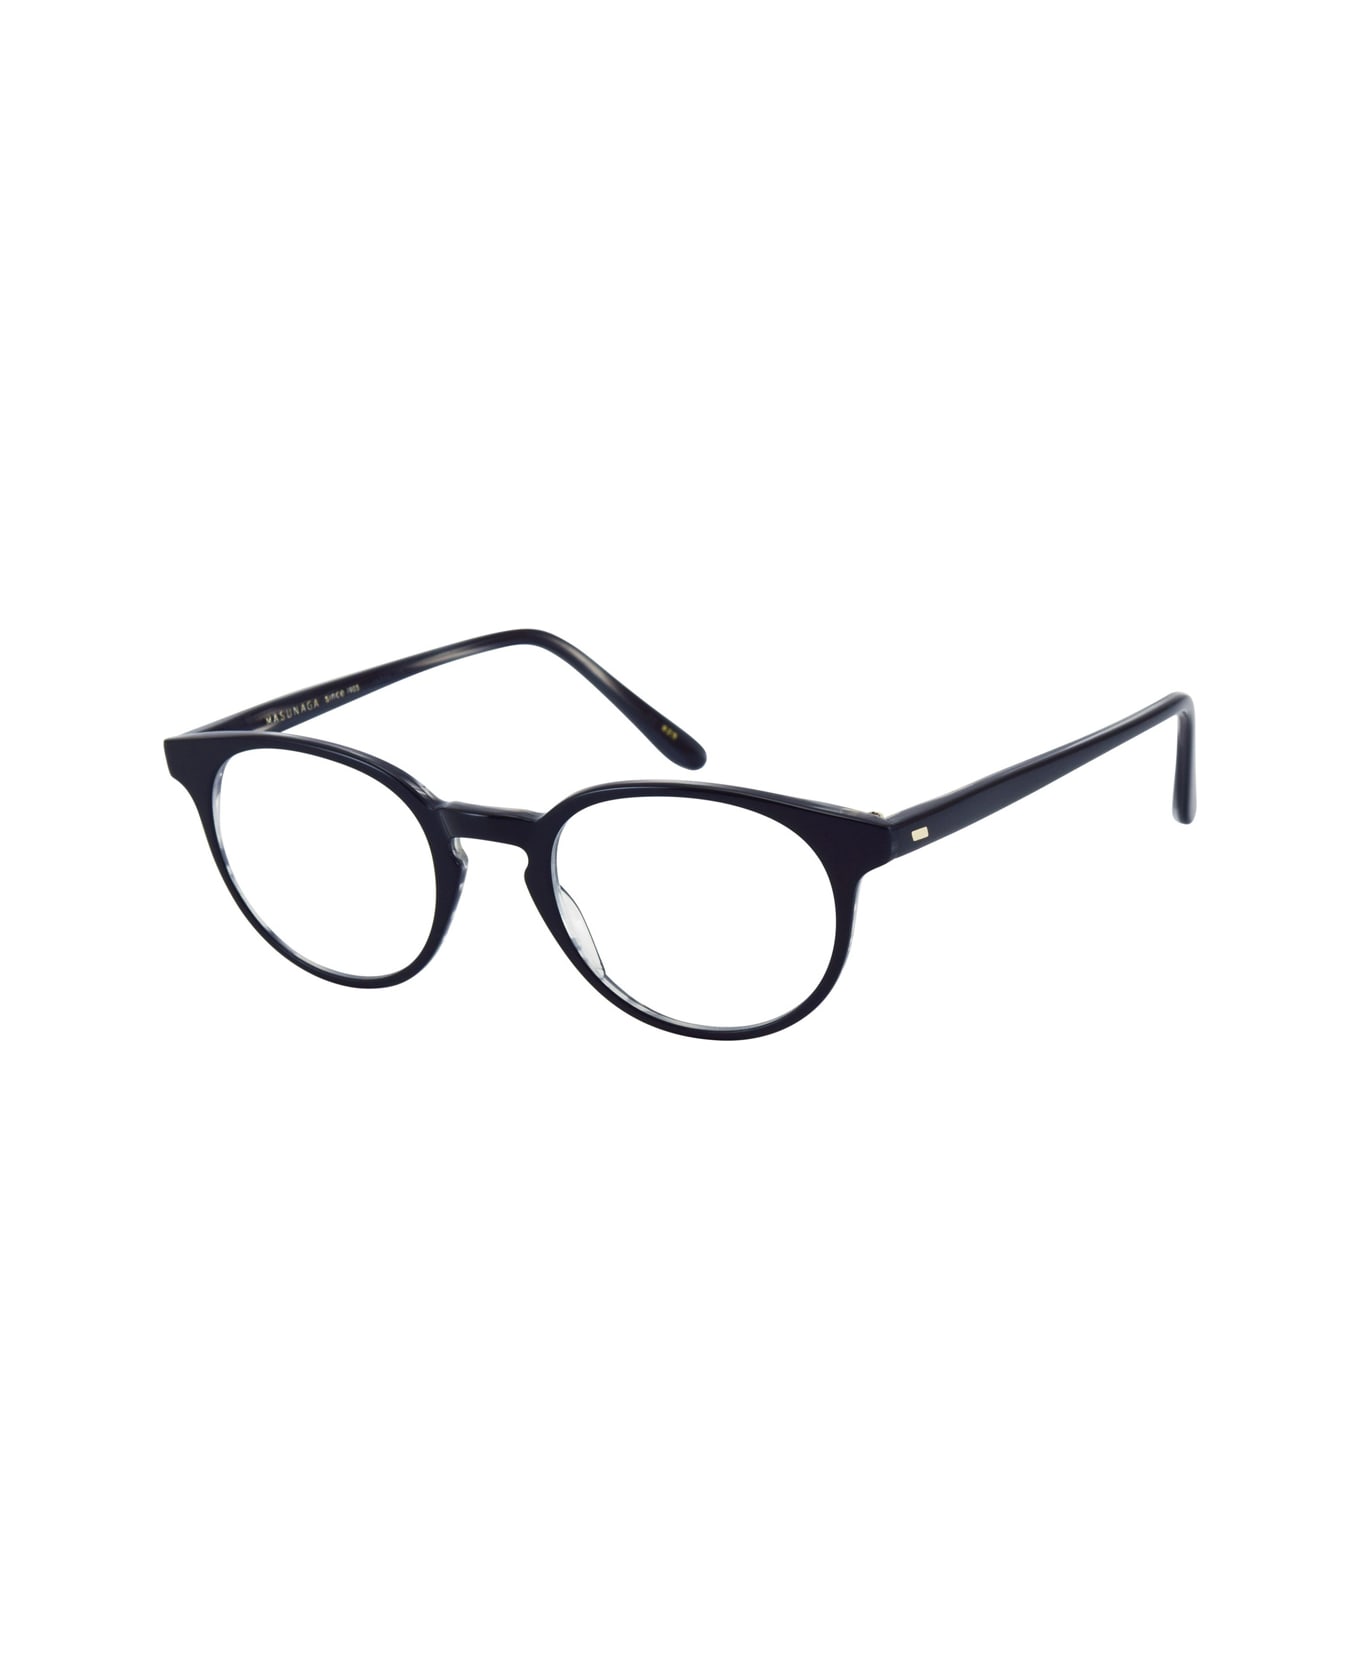 Masunaga 11ds4bl0a Glasses - Nero